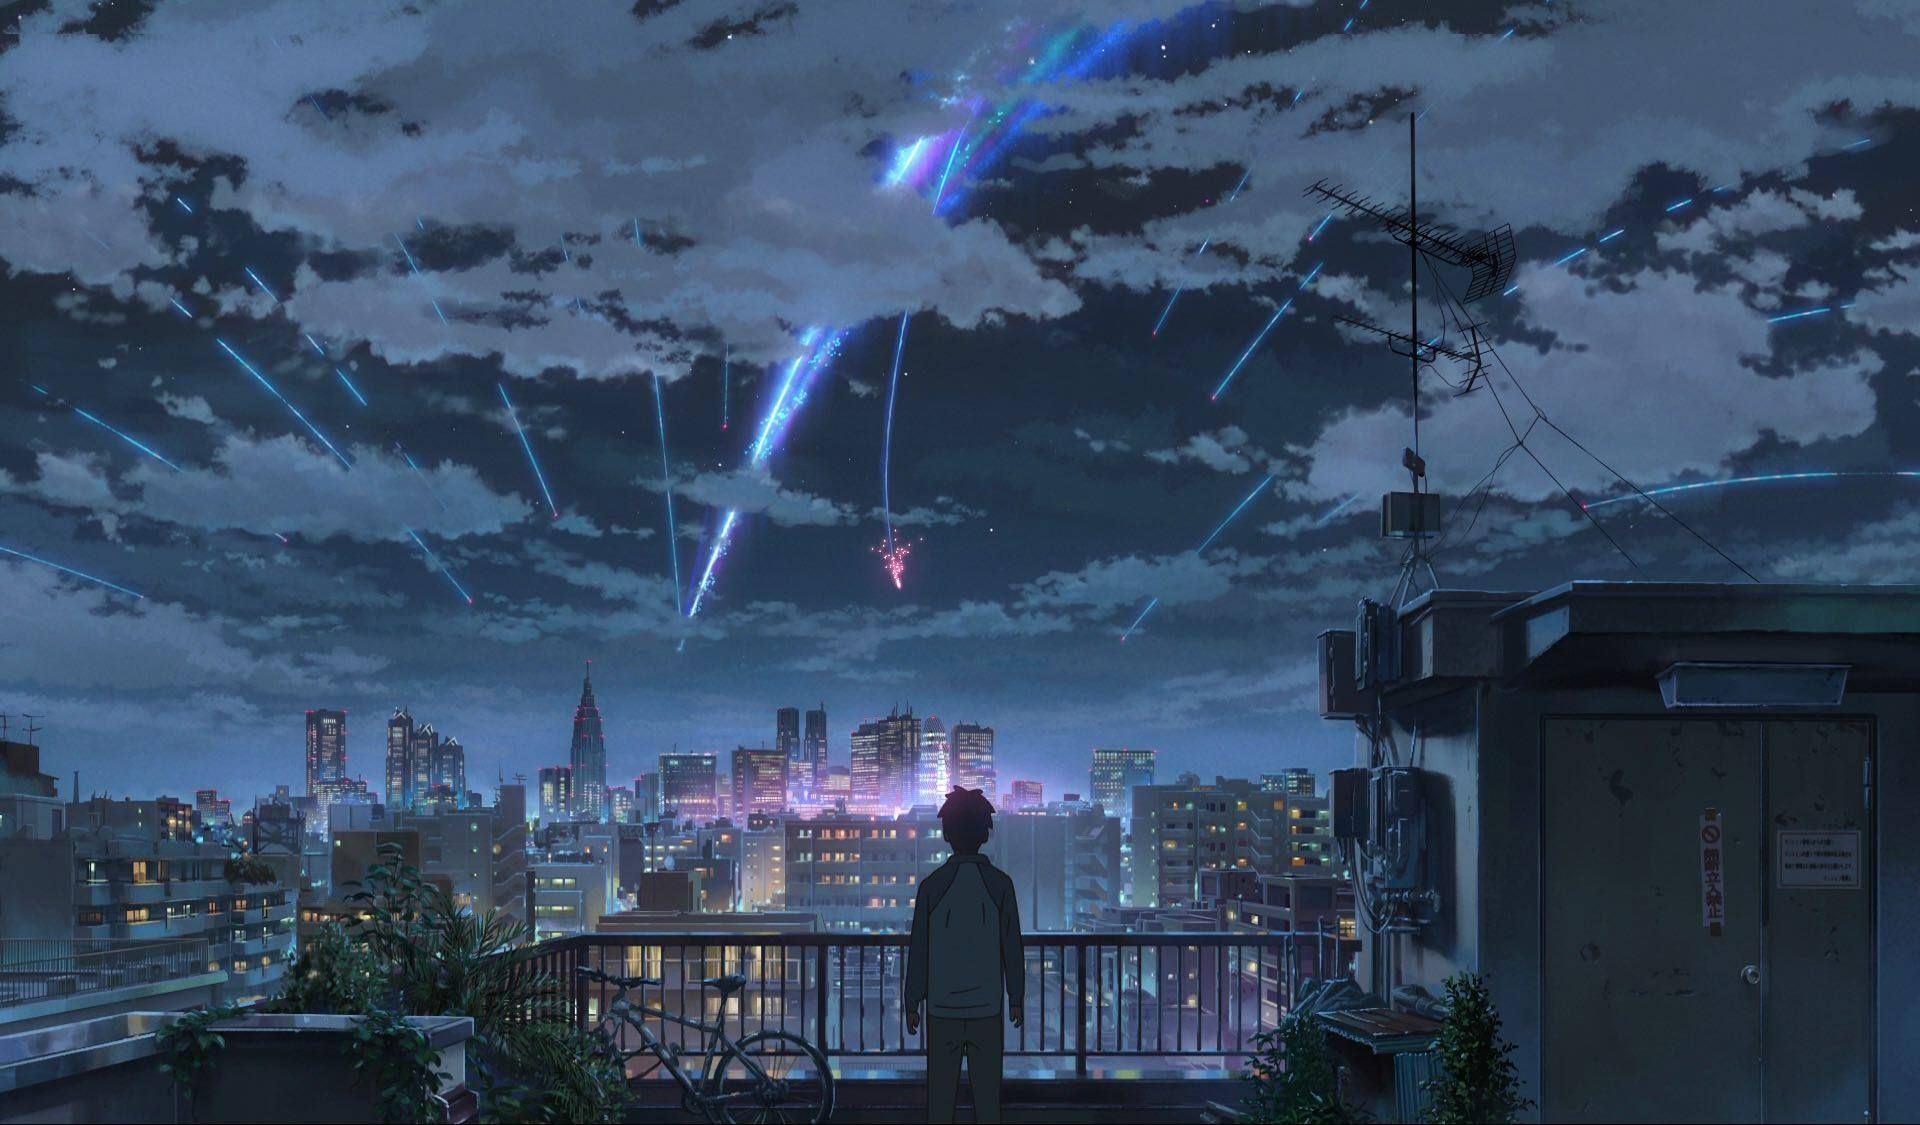 Makoto Shinkai's Your Name, a Japanese anime film. Kimi no na wa